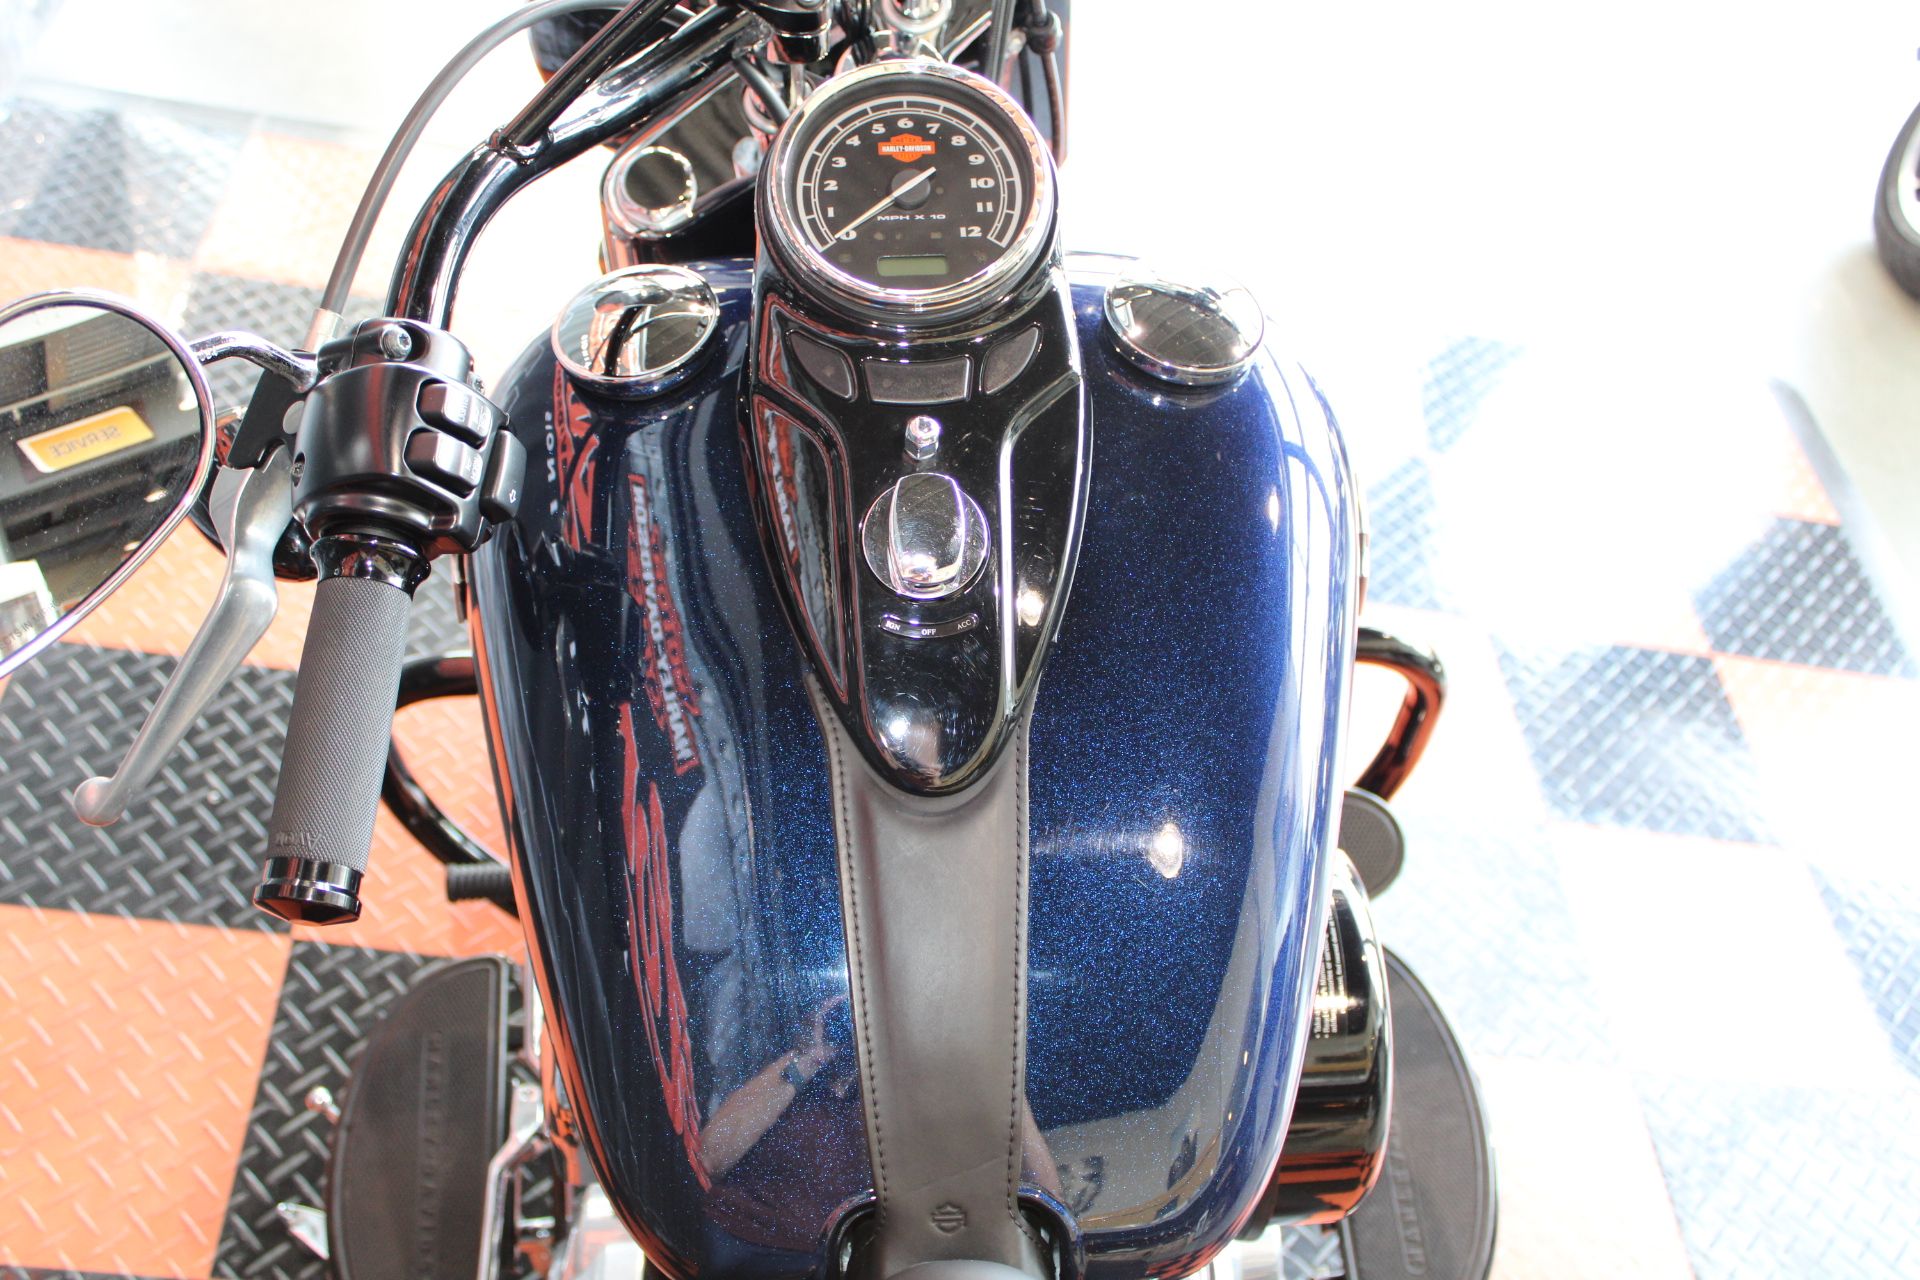 2013 Harley-Davidson Softail Slim® in Shorewood, Illinois - Photo 10